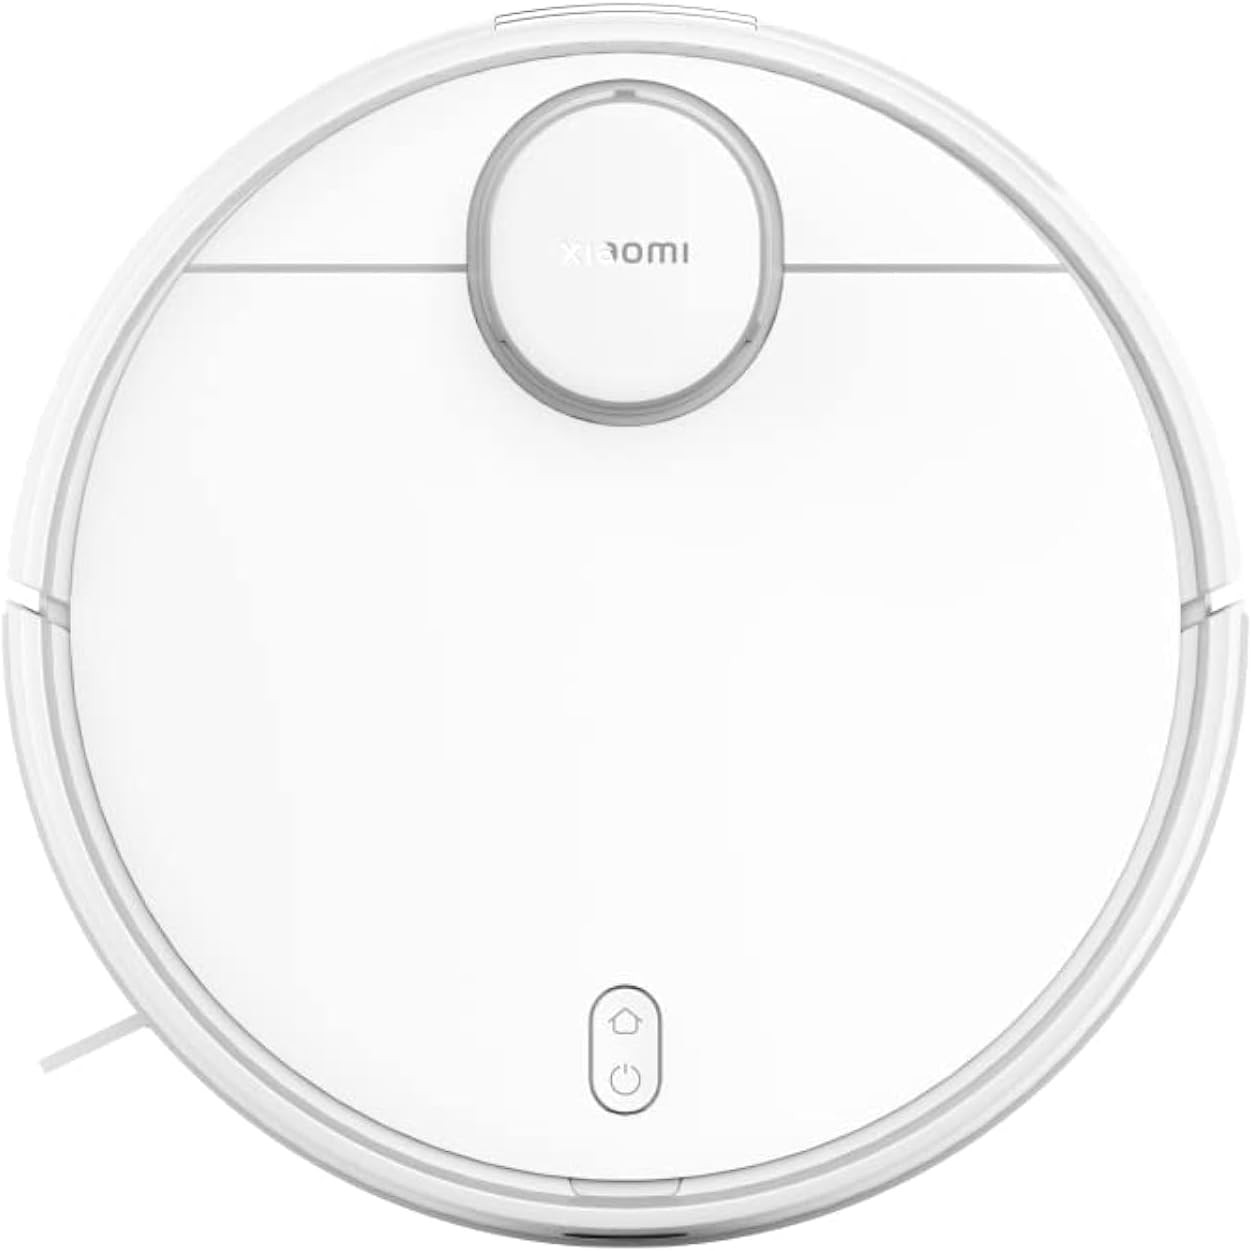 Xiaomi Robot Vacuum S10